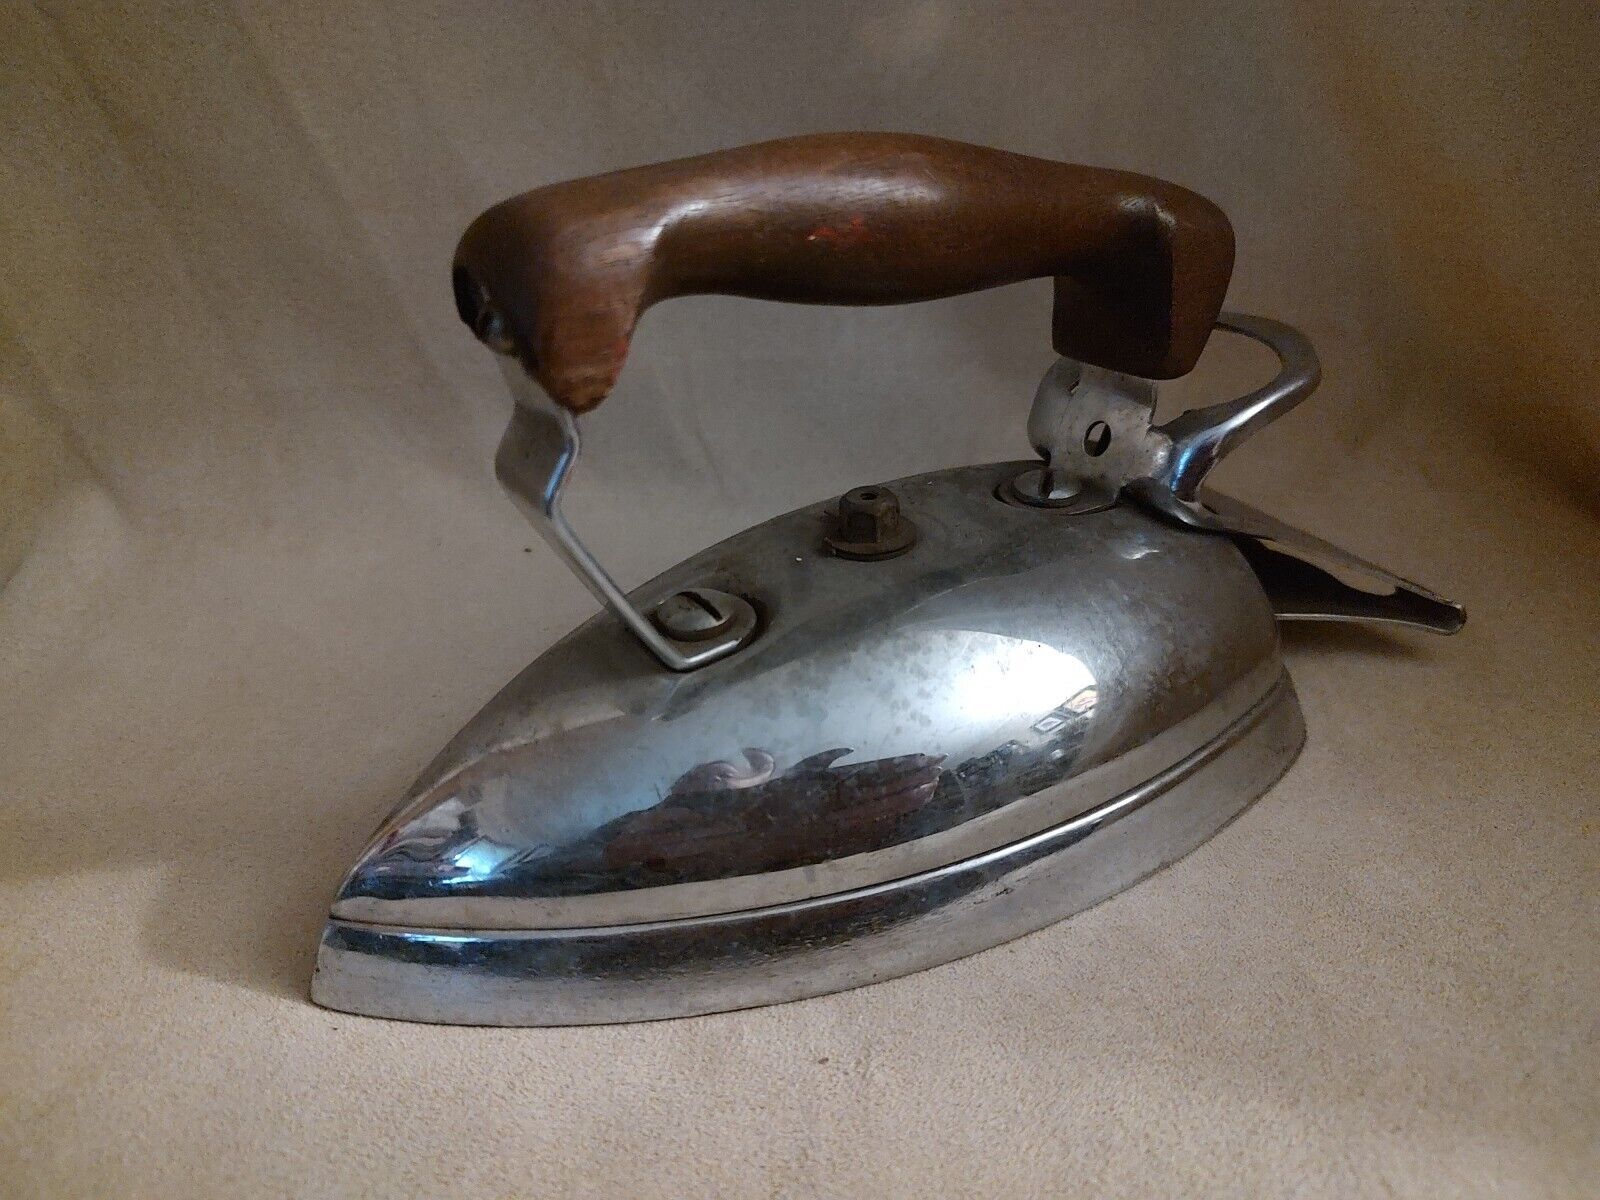 VTG Art Deco Master craft Electric Iron 1930s No Cord